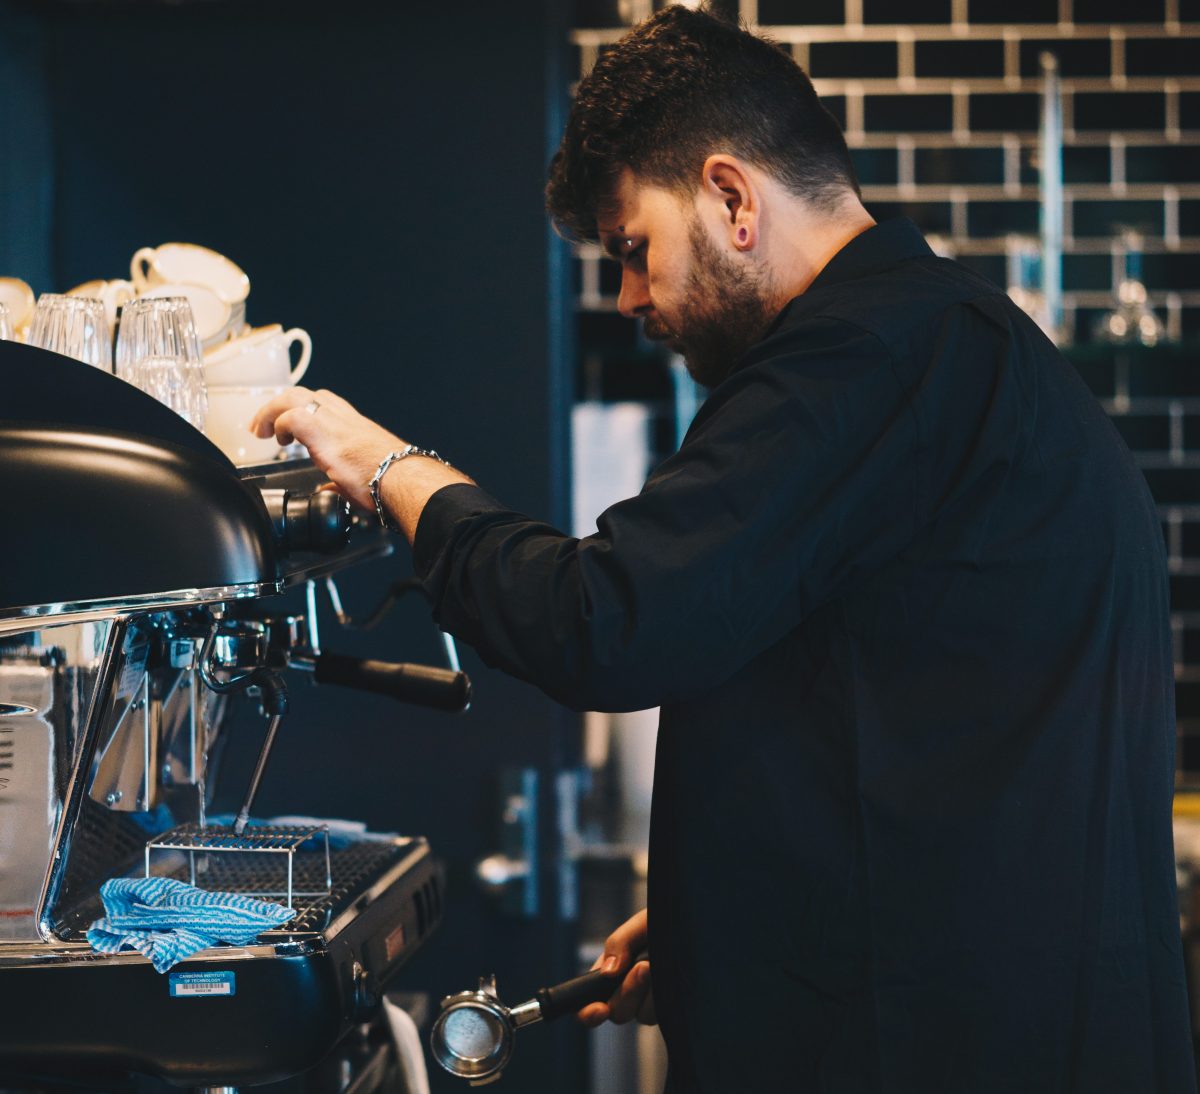 Barista at a coffee machine making coffee